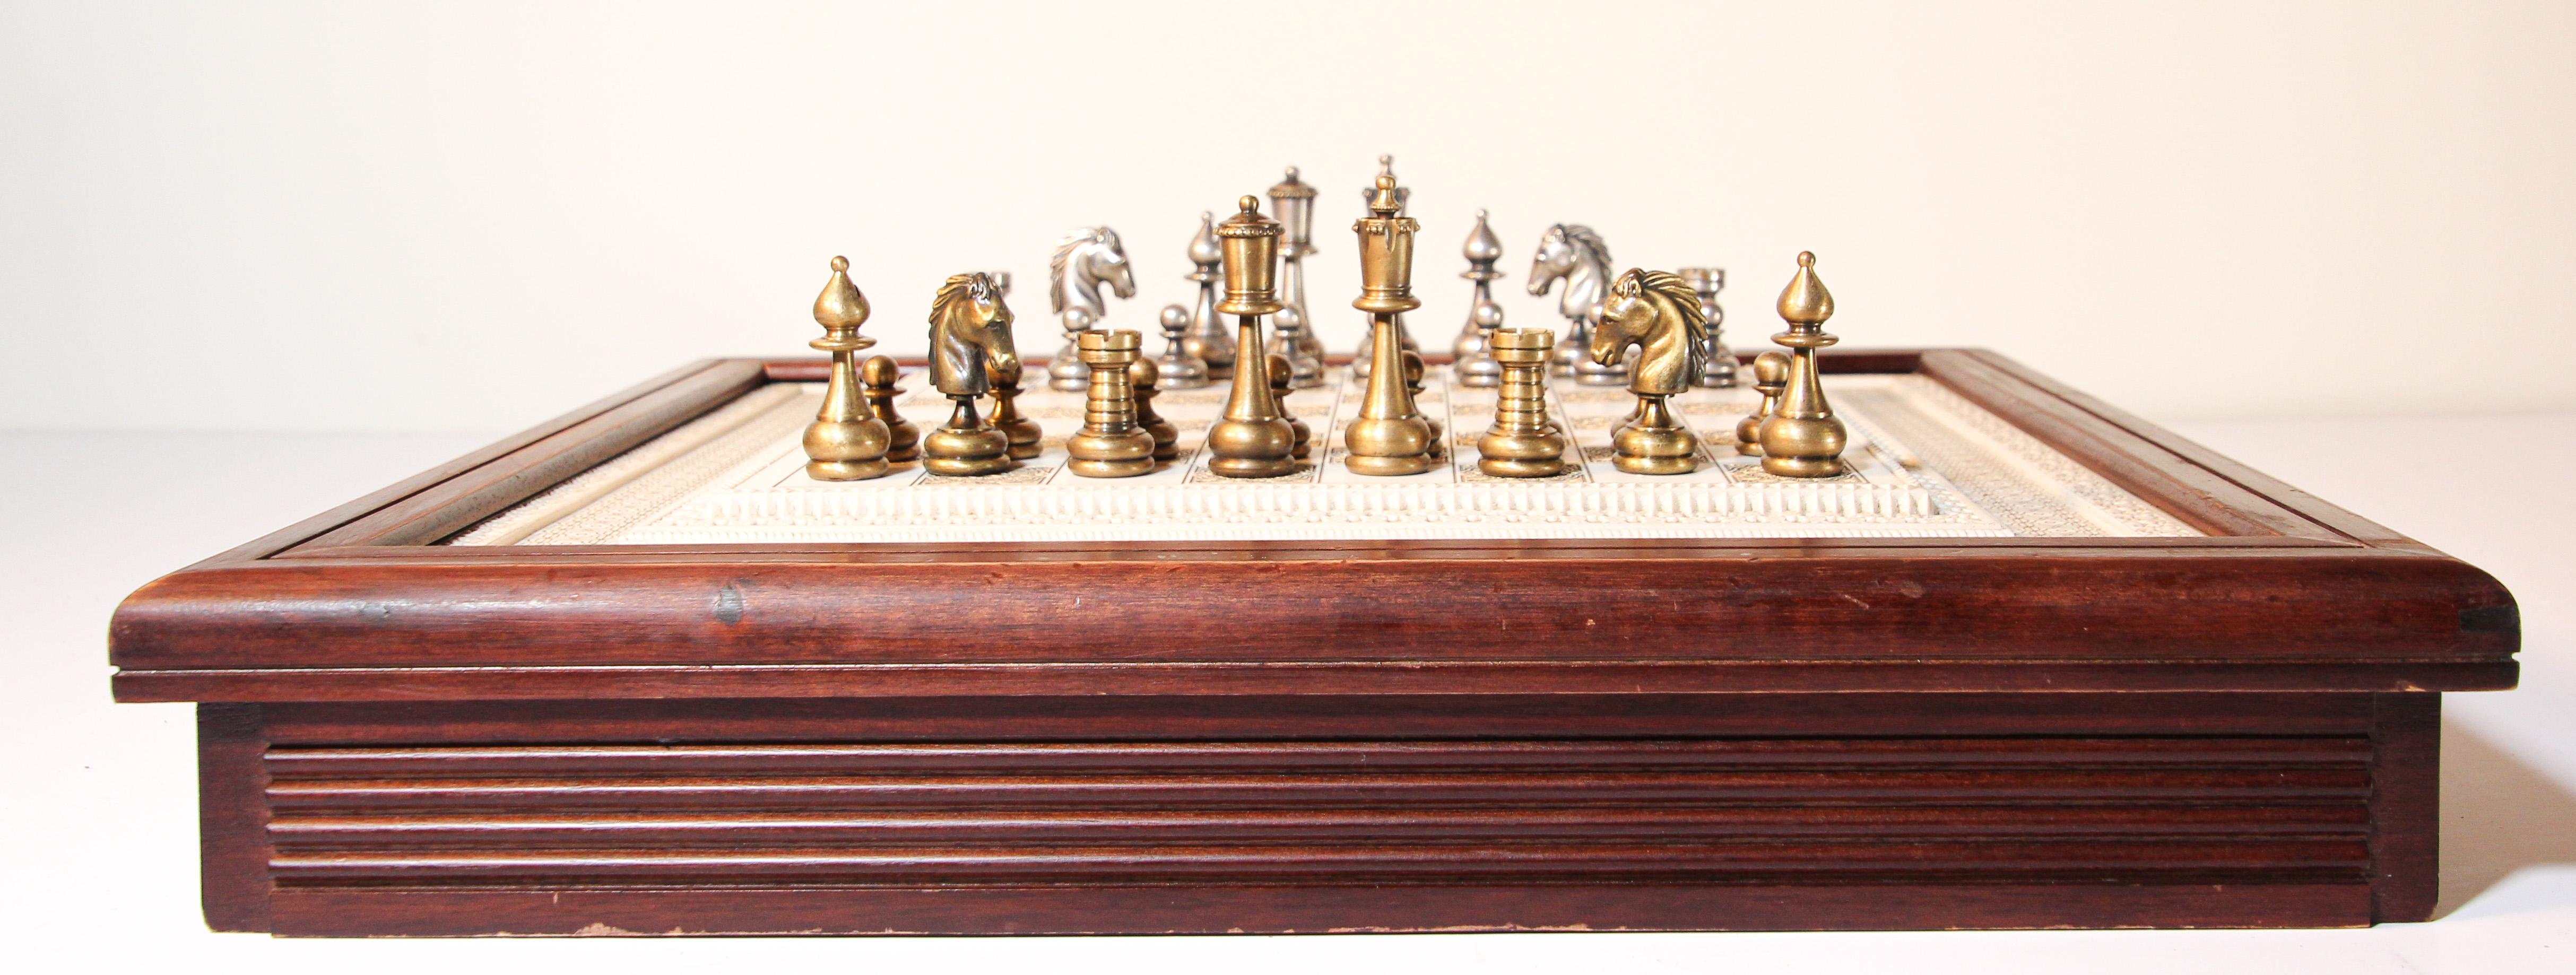 the italian game chess